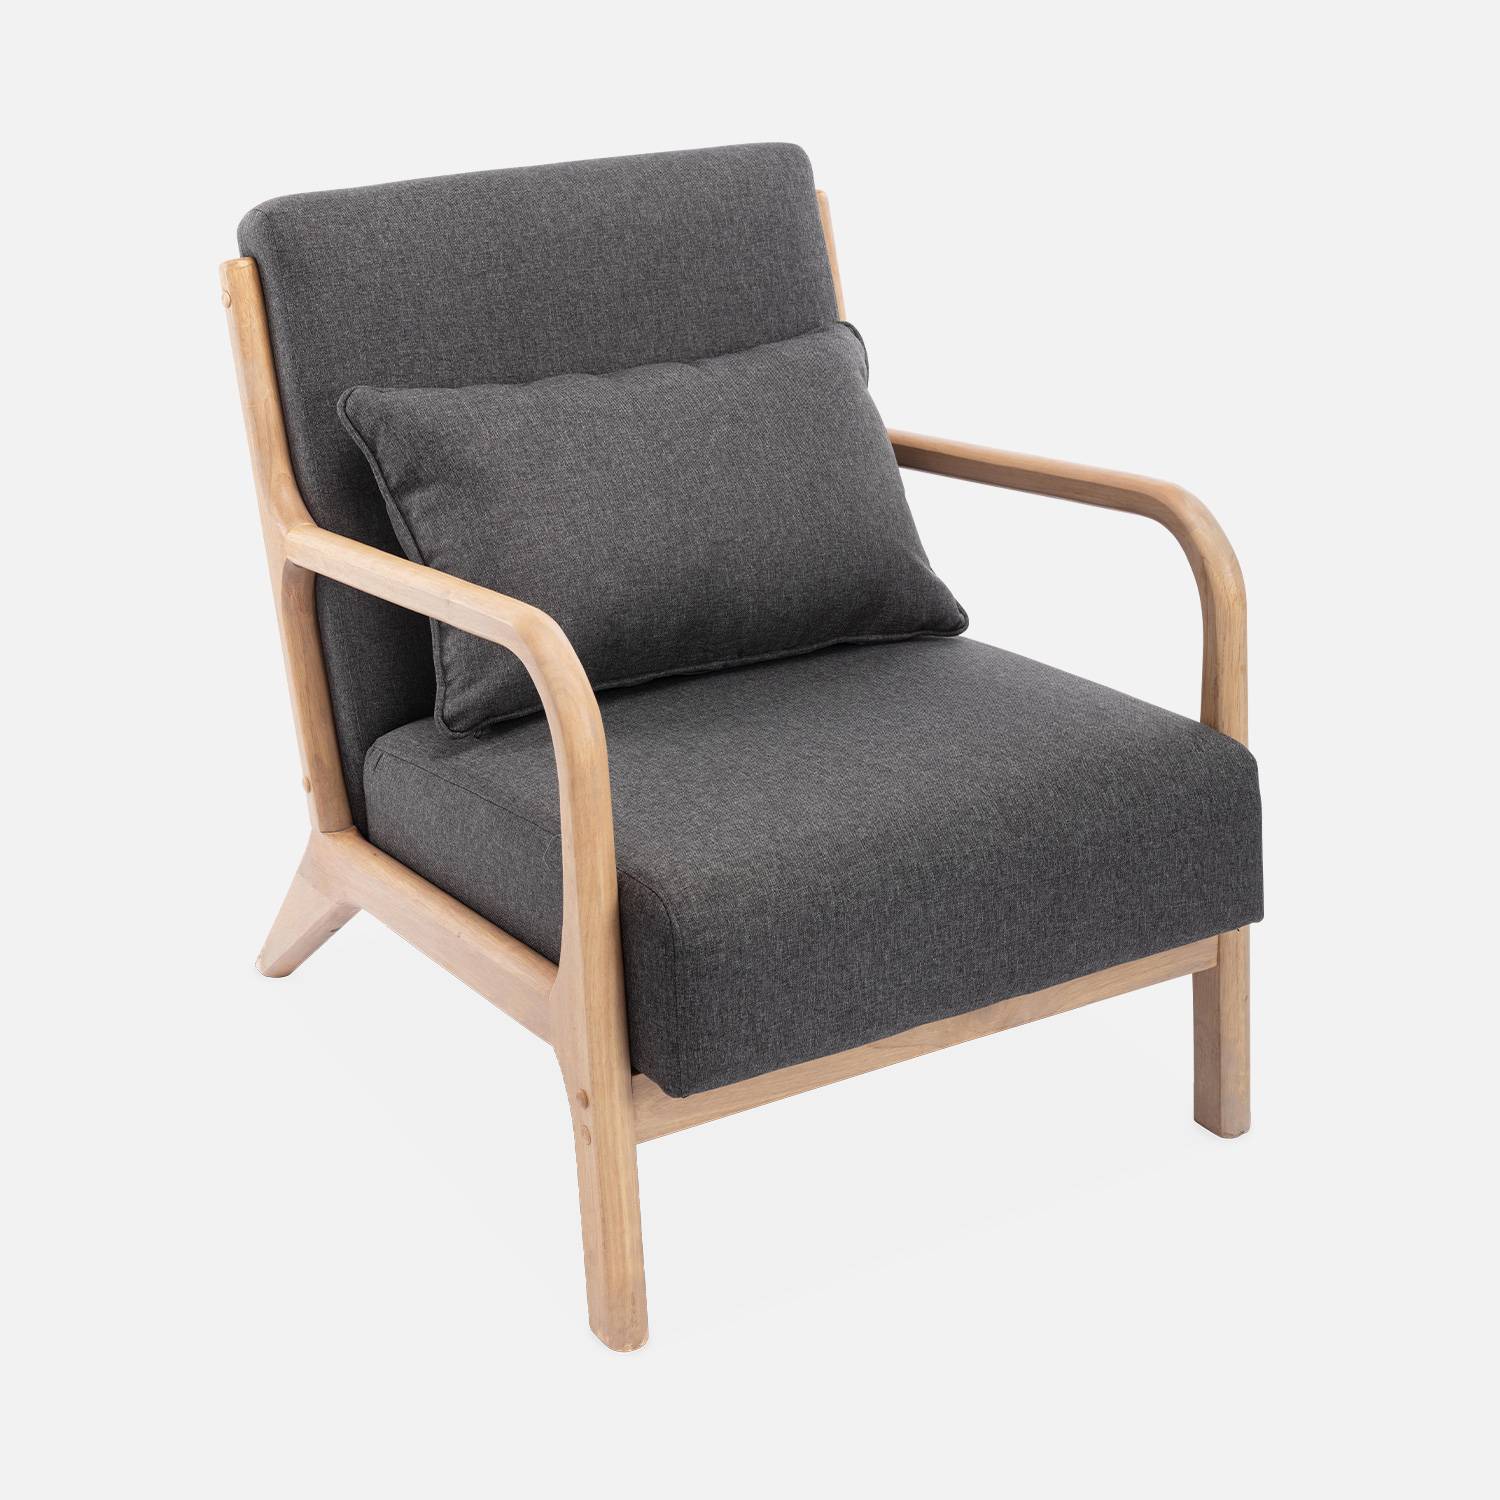 Sillón de diseño de madera y tela, 1 asiento recto fijo, patas de compás escandinavas, armazón de madera maciza, asiento cómodo, gris oscuro,sweeek,Photo4